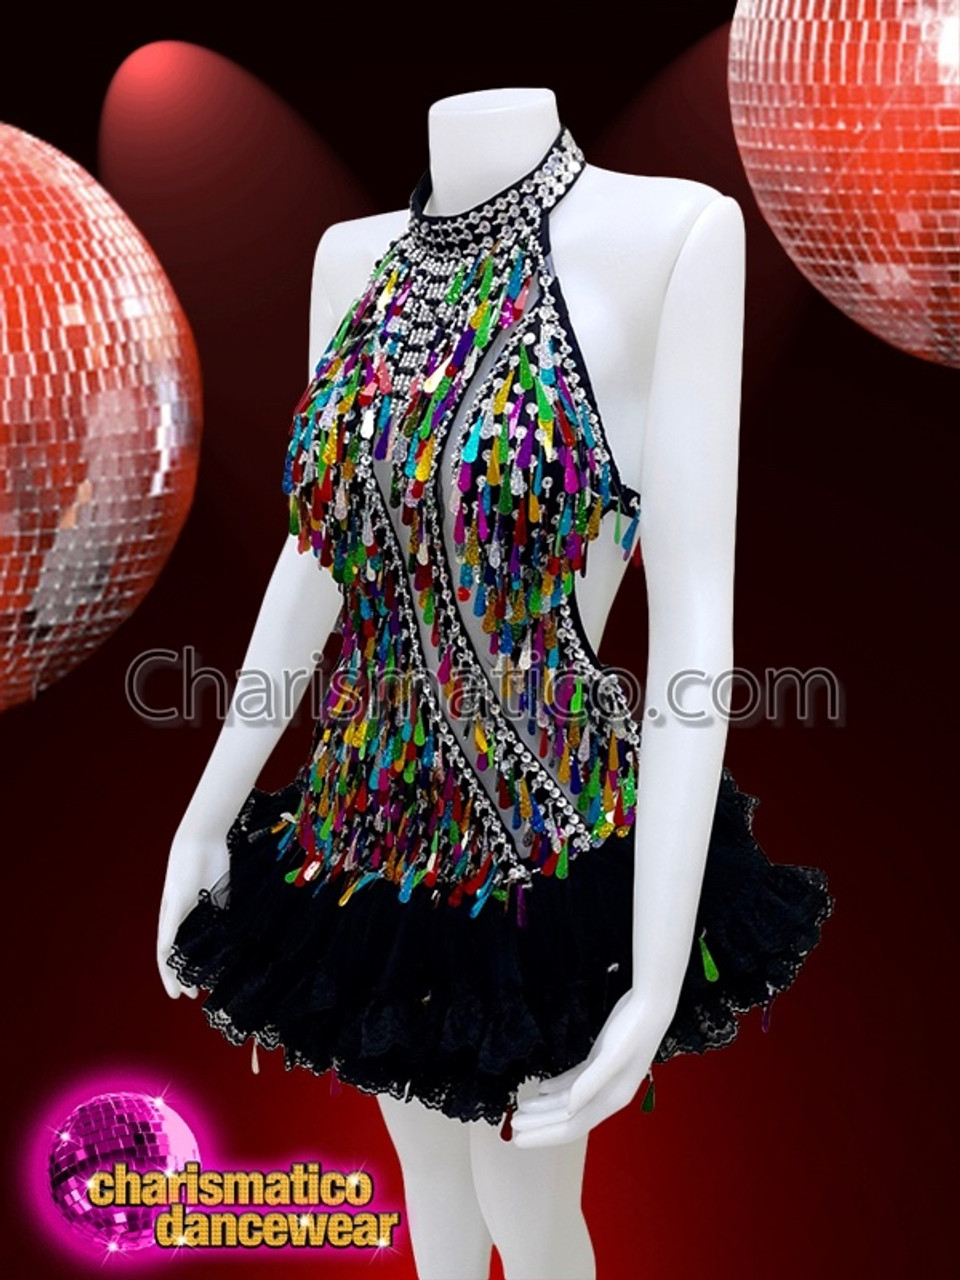 https://cdn11.bigcommerce.com/s-07991/images/stencil/1280x1280/products/5690/41570/Rainbow_sequin_dress__24561.1499842521.jpg?c=2